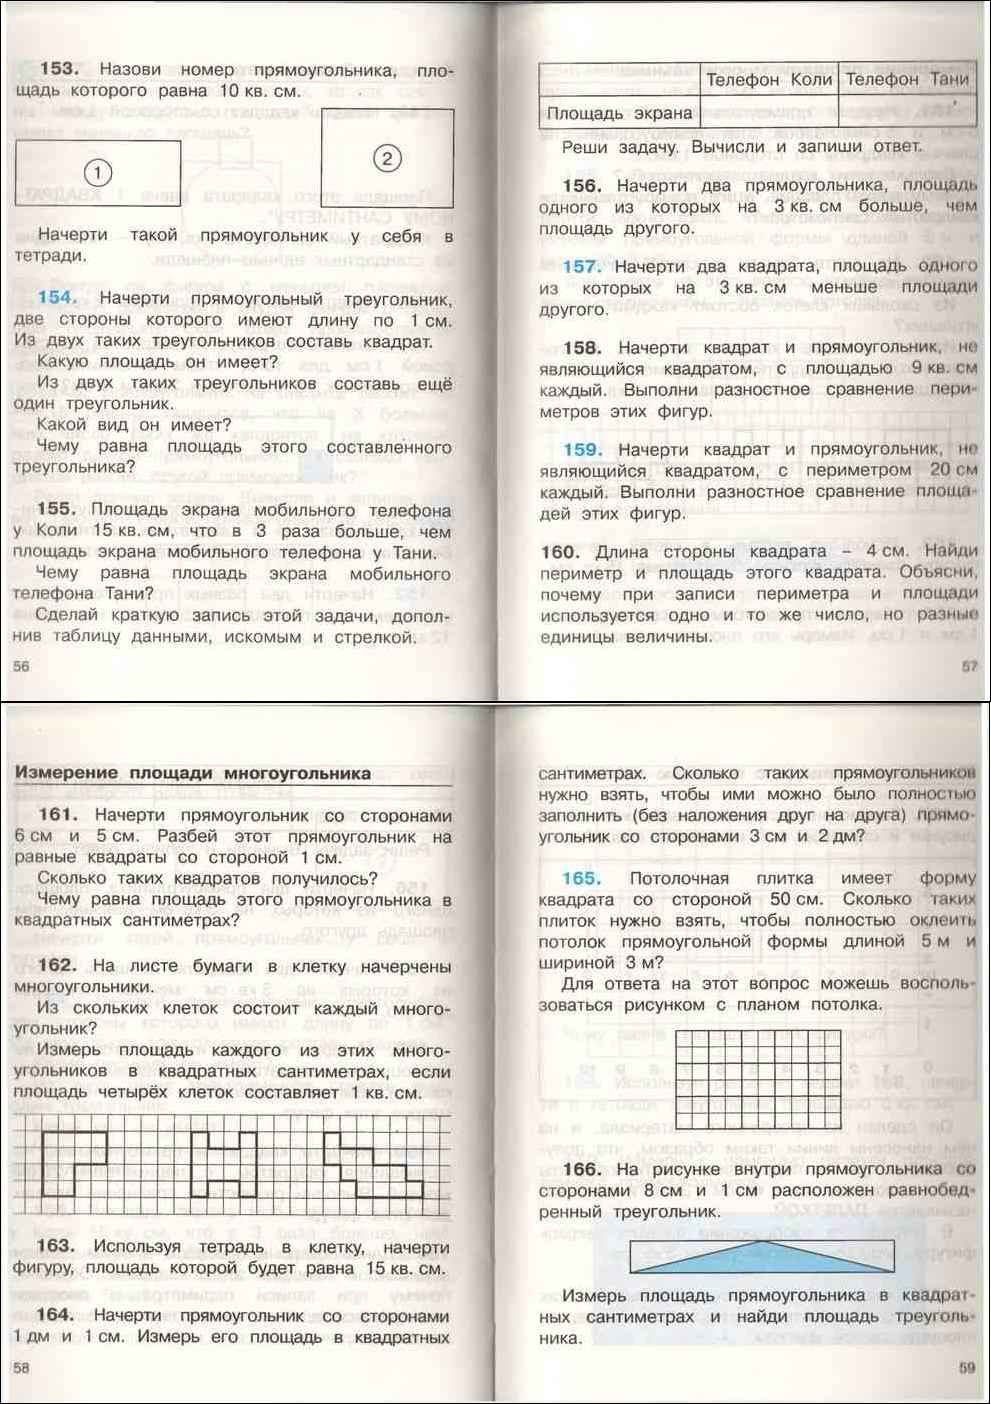 Учебник математики третий класс чекин